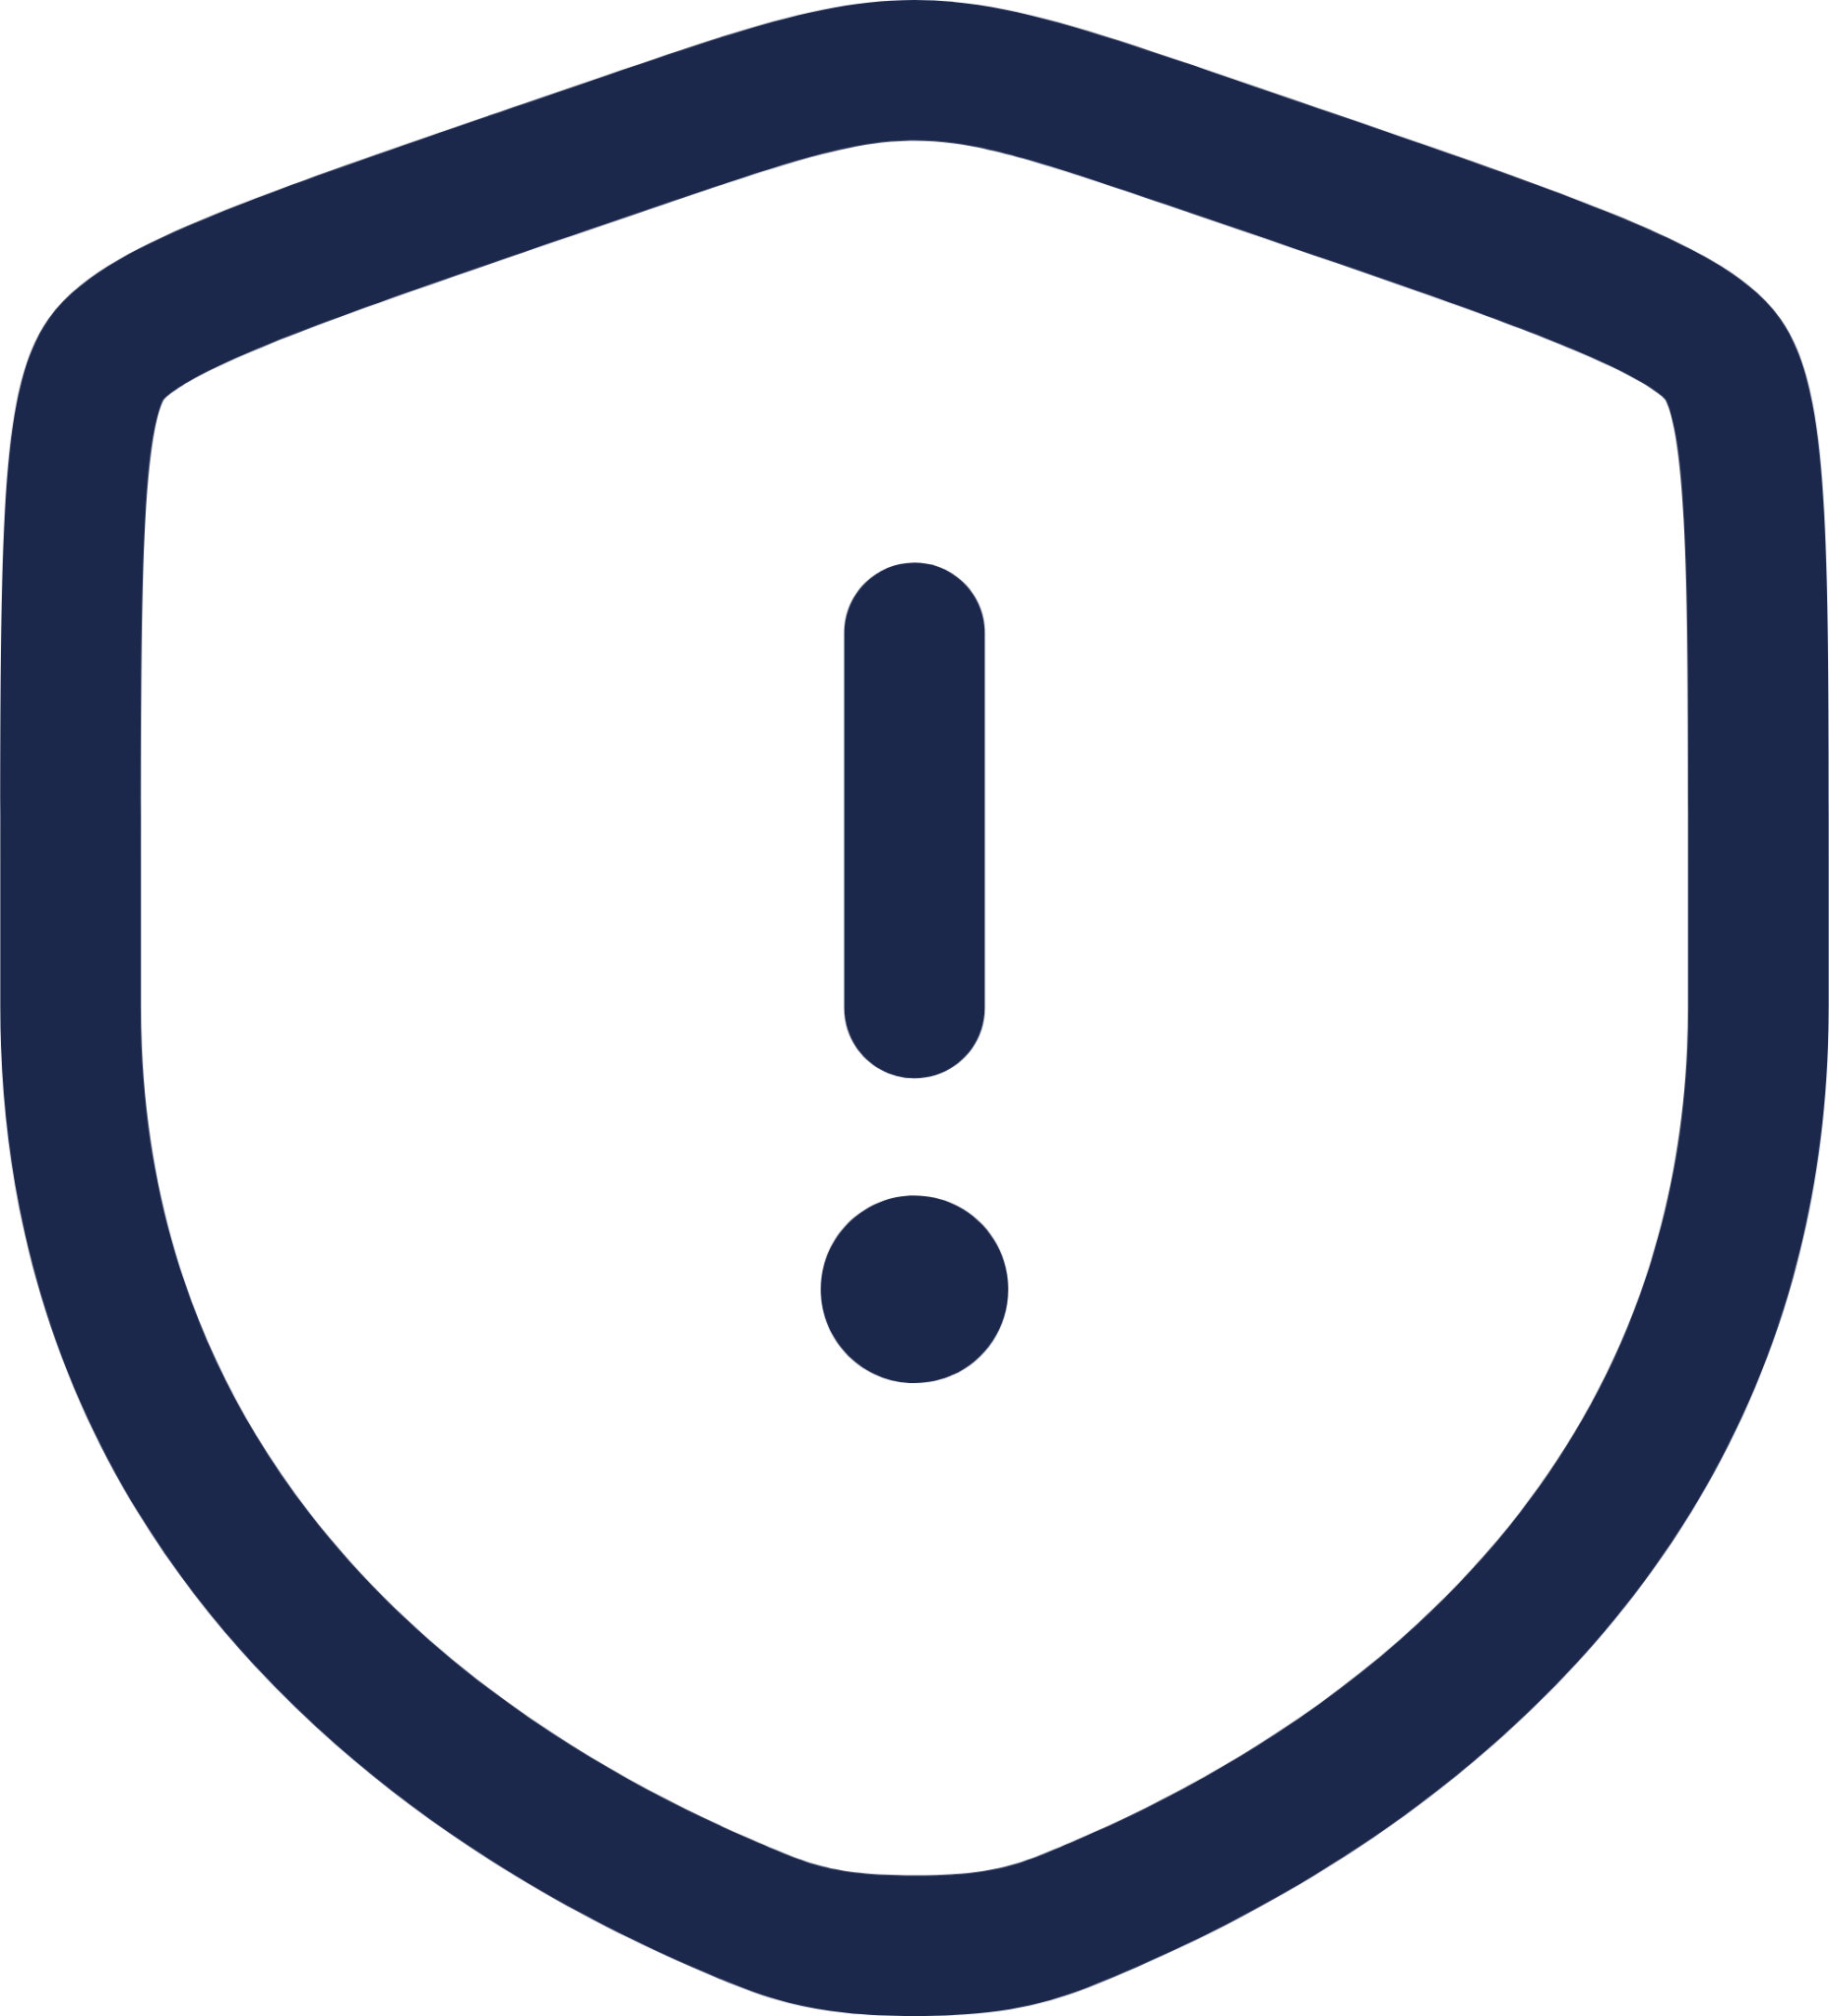 Shield Warning icon